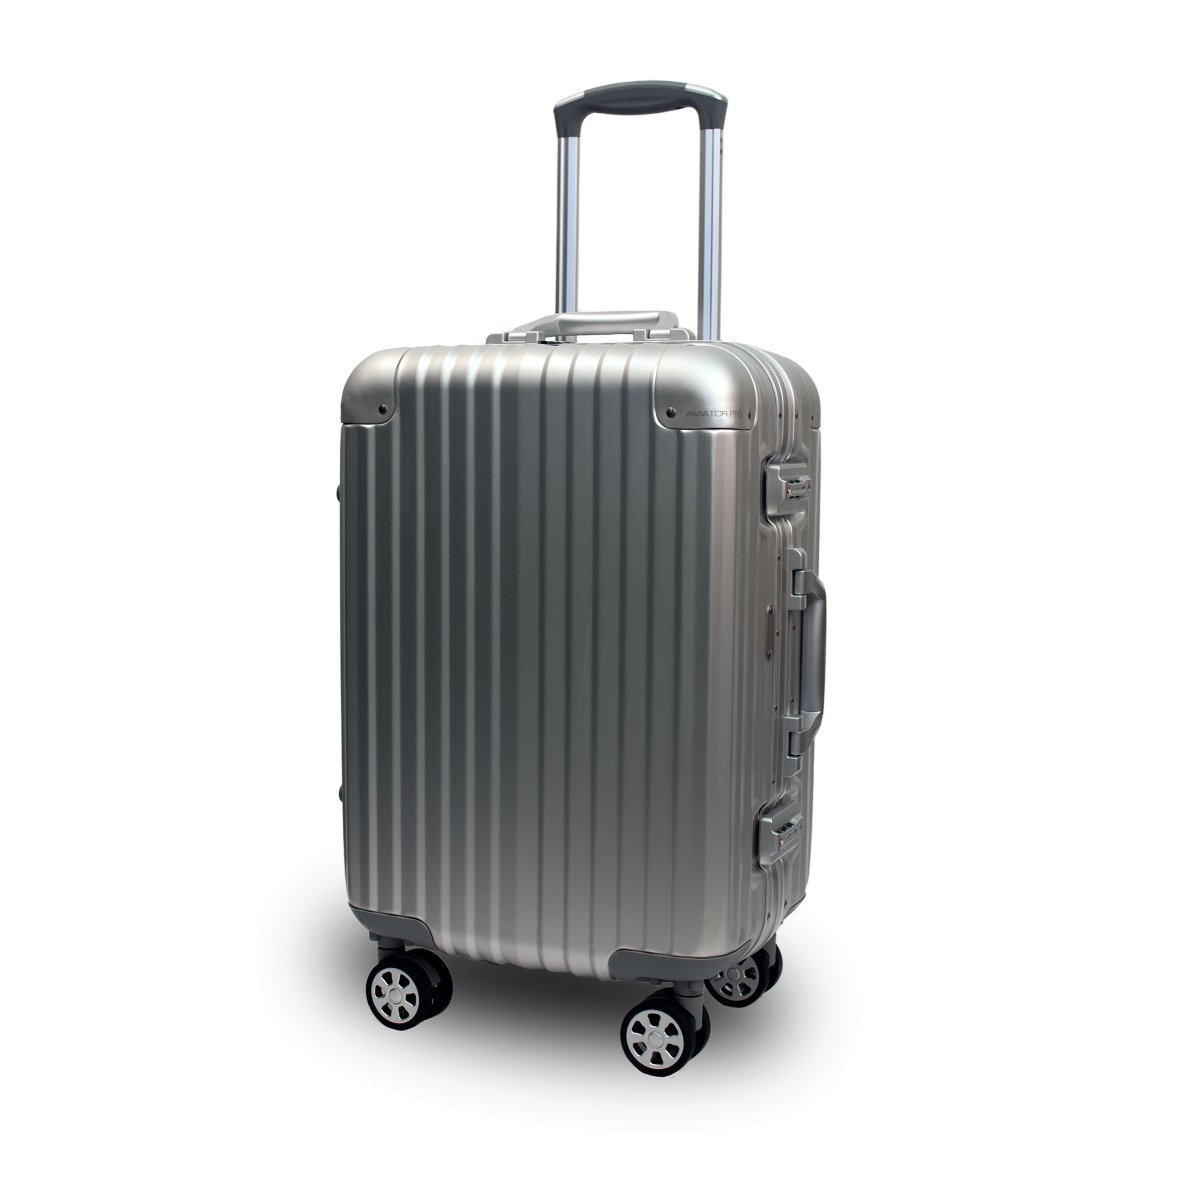 MYGOFLIGHT Digital Luggage Scale